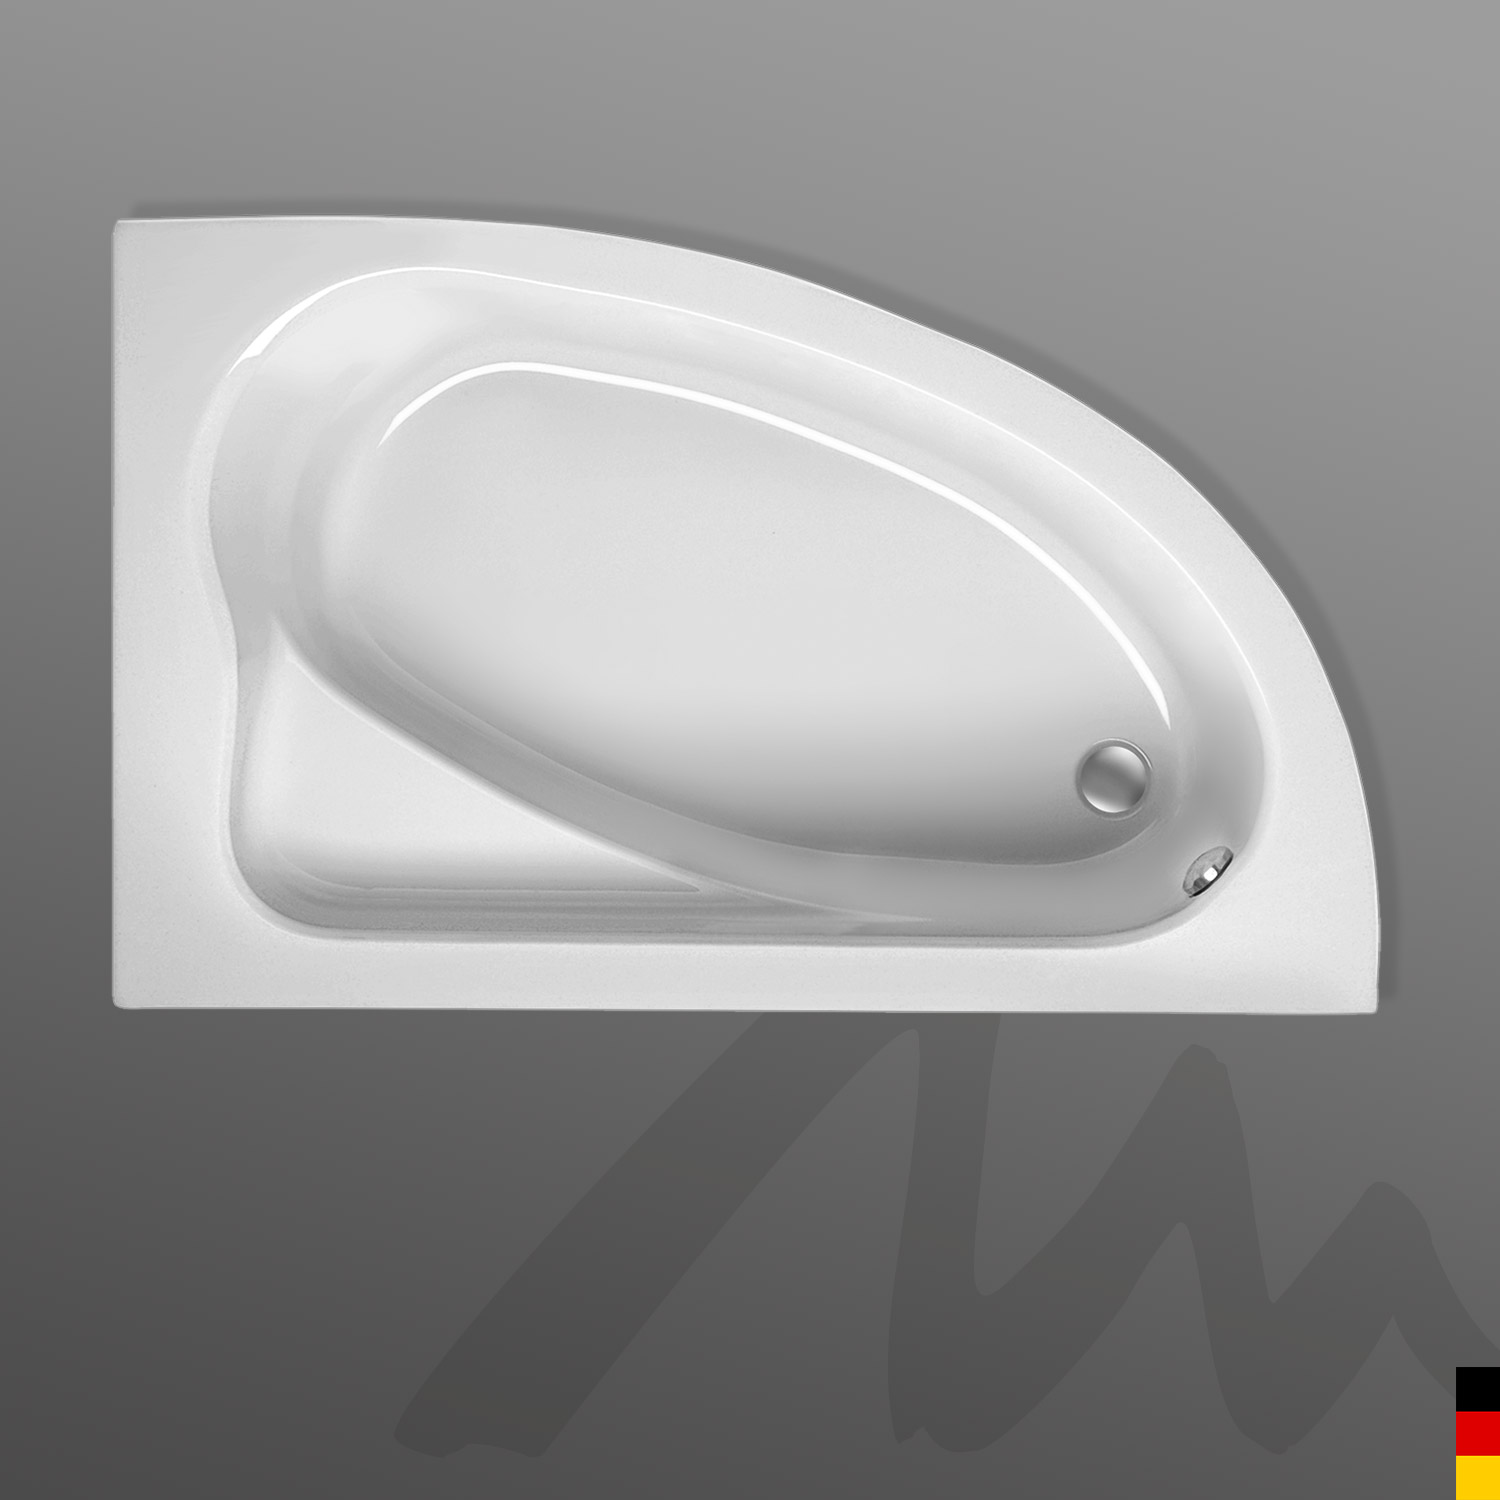 Mauersberger Badewanne Eckwanne Aspera 170/100 Ausführung rechts  170x100x45cm  Farbe:weiß